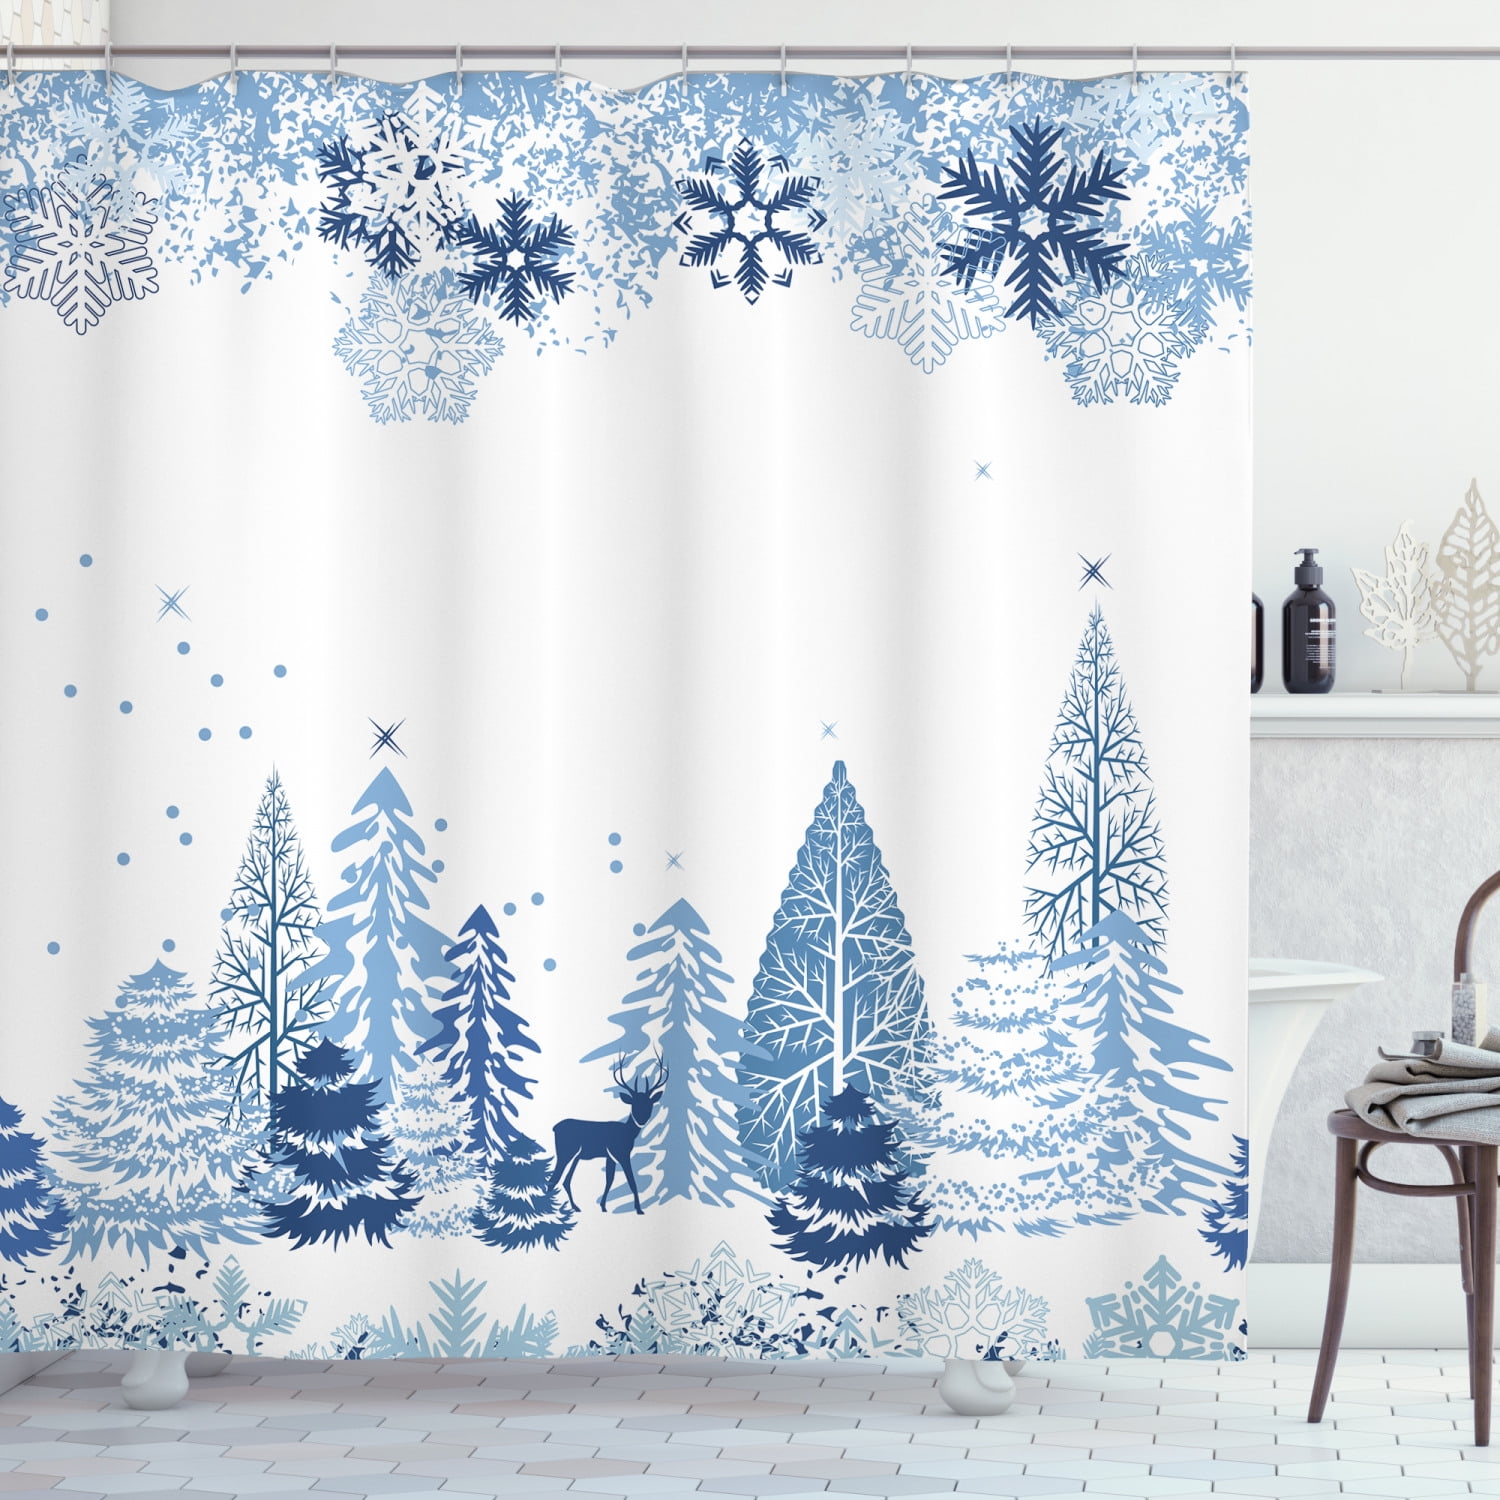 Blue Background Christmas Winter Snowflakes Shower Curtain Set Bathroom Decor 